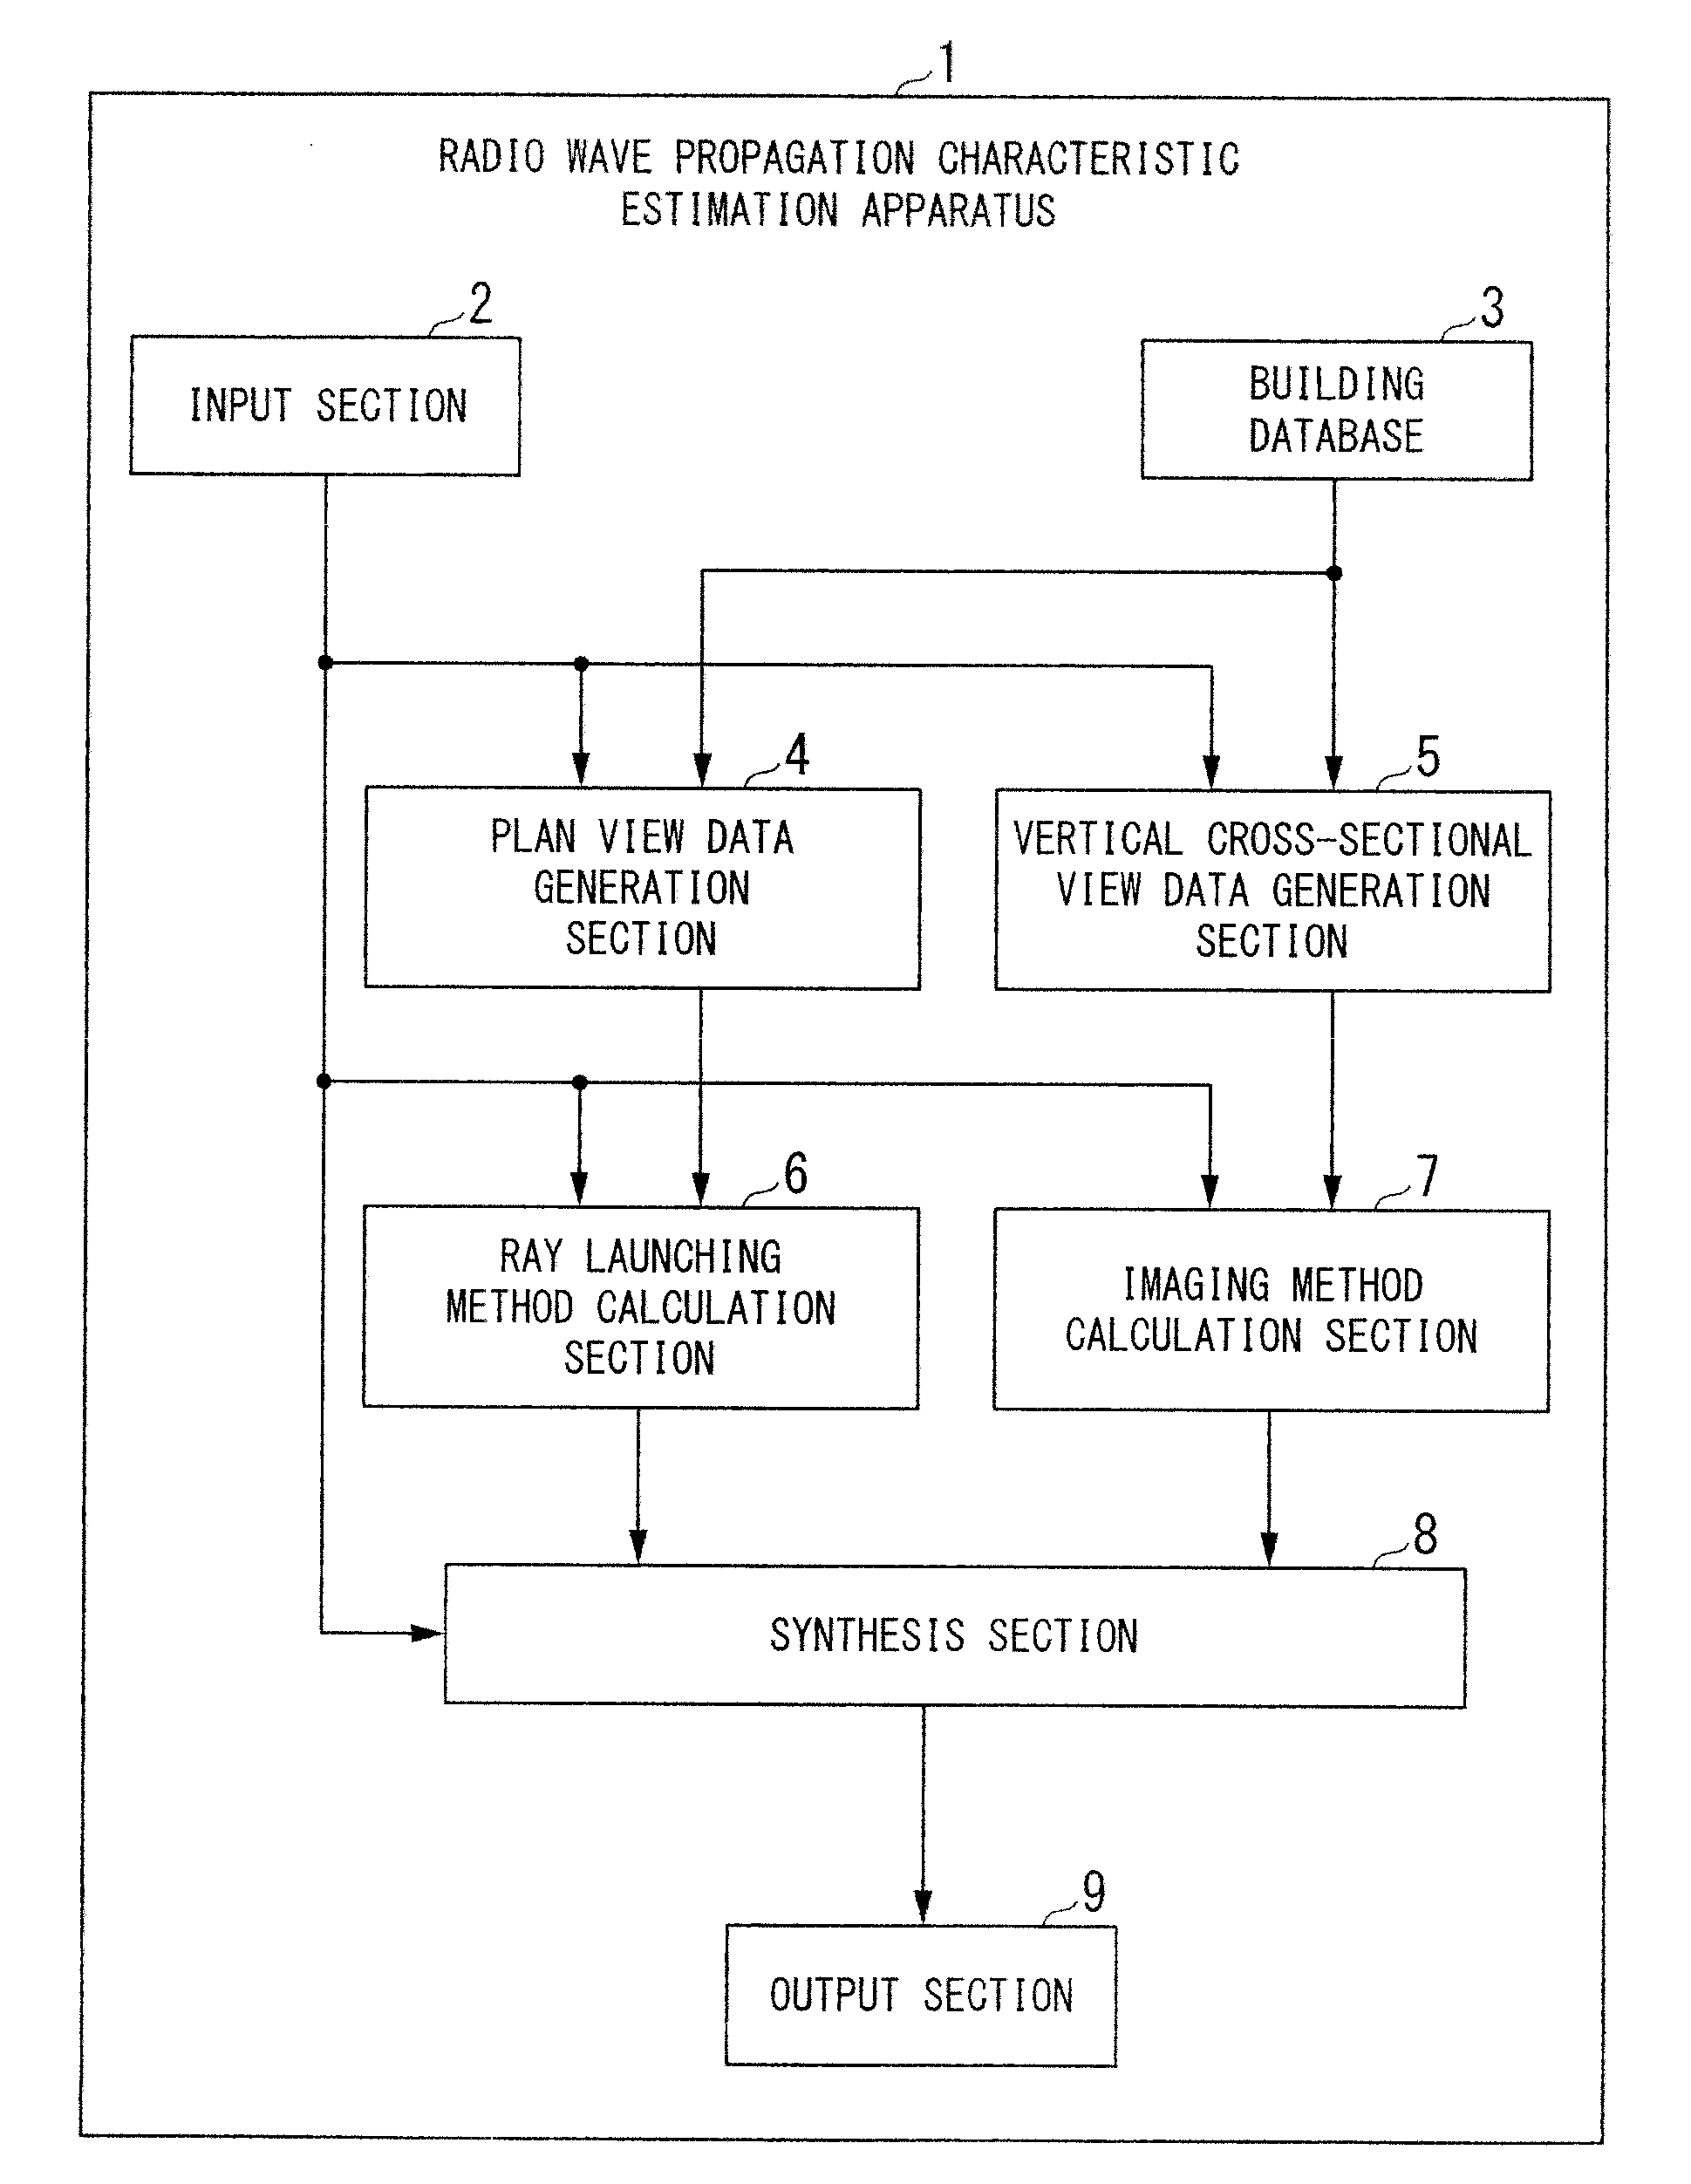 Radio wave propagation characteristic estimation apparatus and computer program